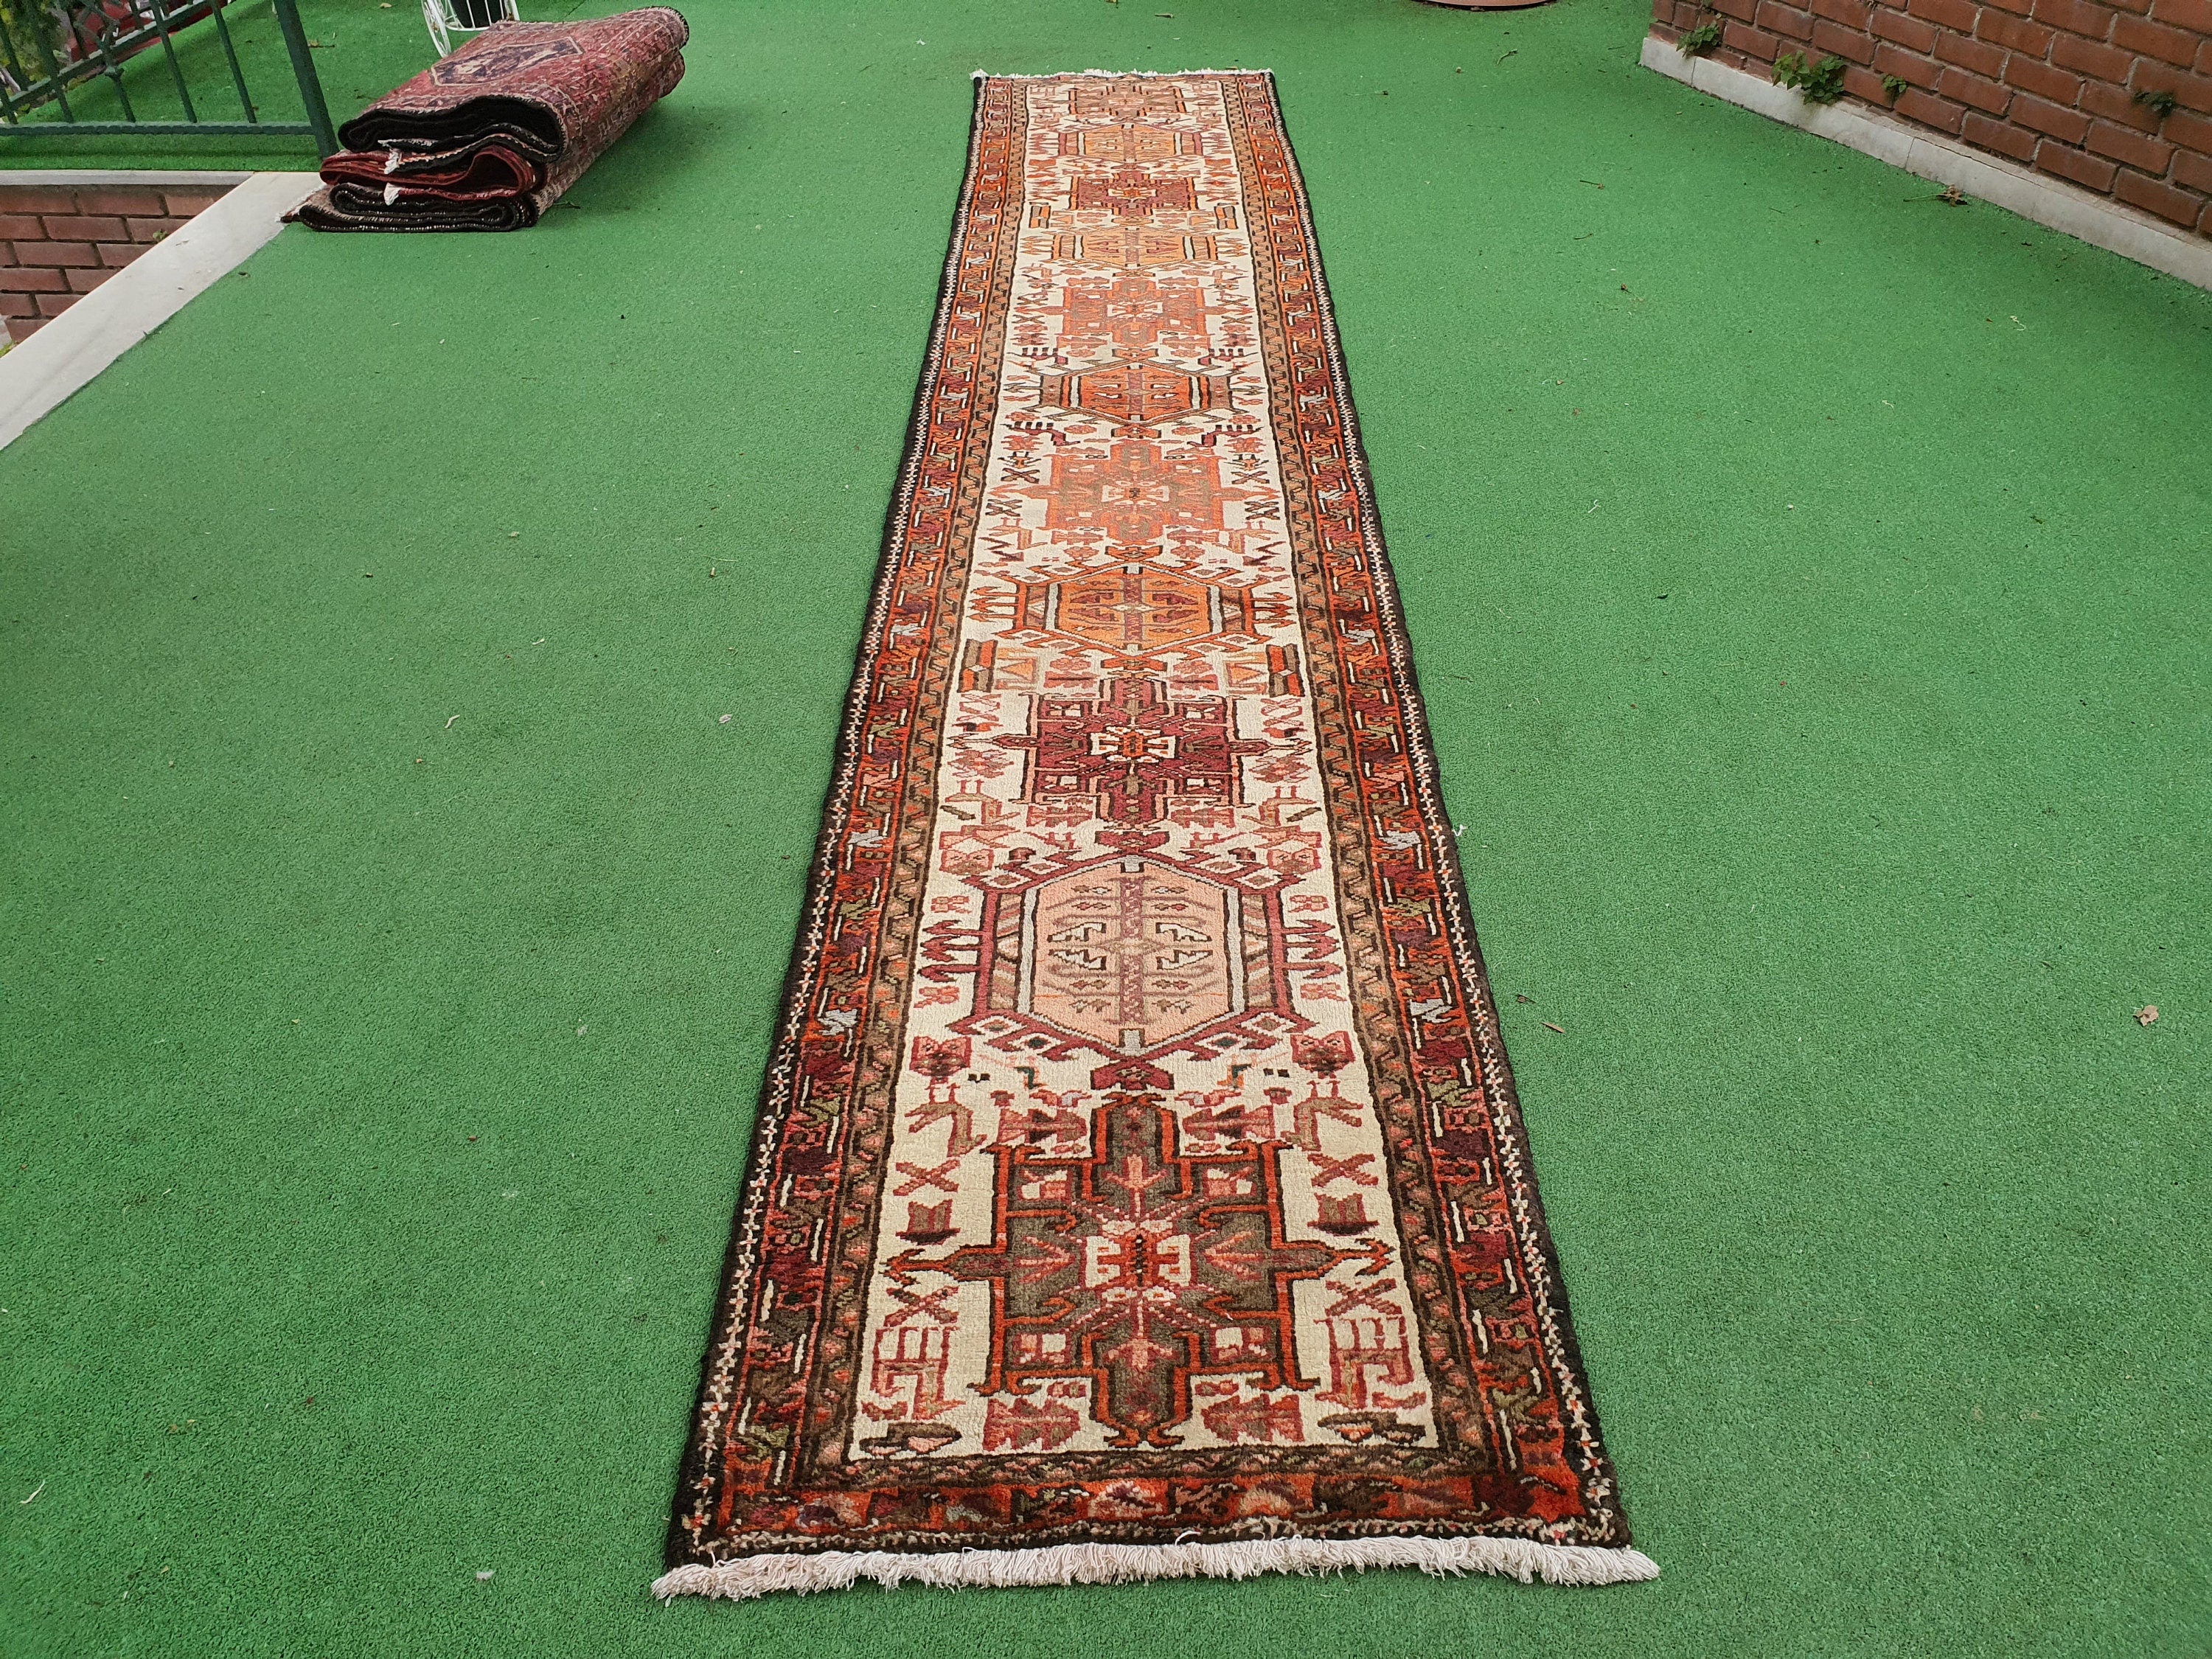 Persian Hallway Long Corridor Rug 13 x 2 ft Beige Orange Vintage Turkish Natural Wool Recycled Passage Rug, Rustic Decor Antique Runner